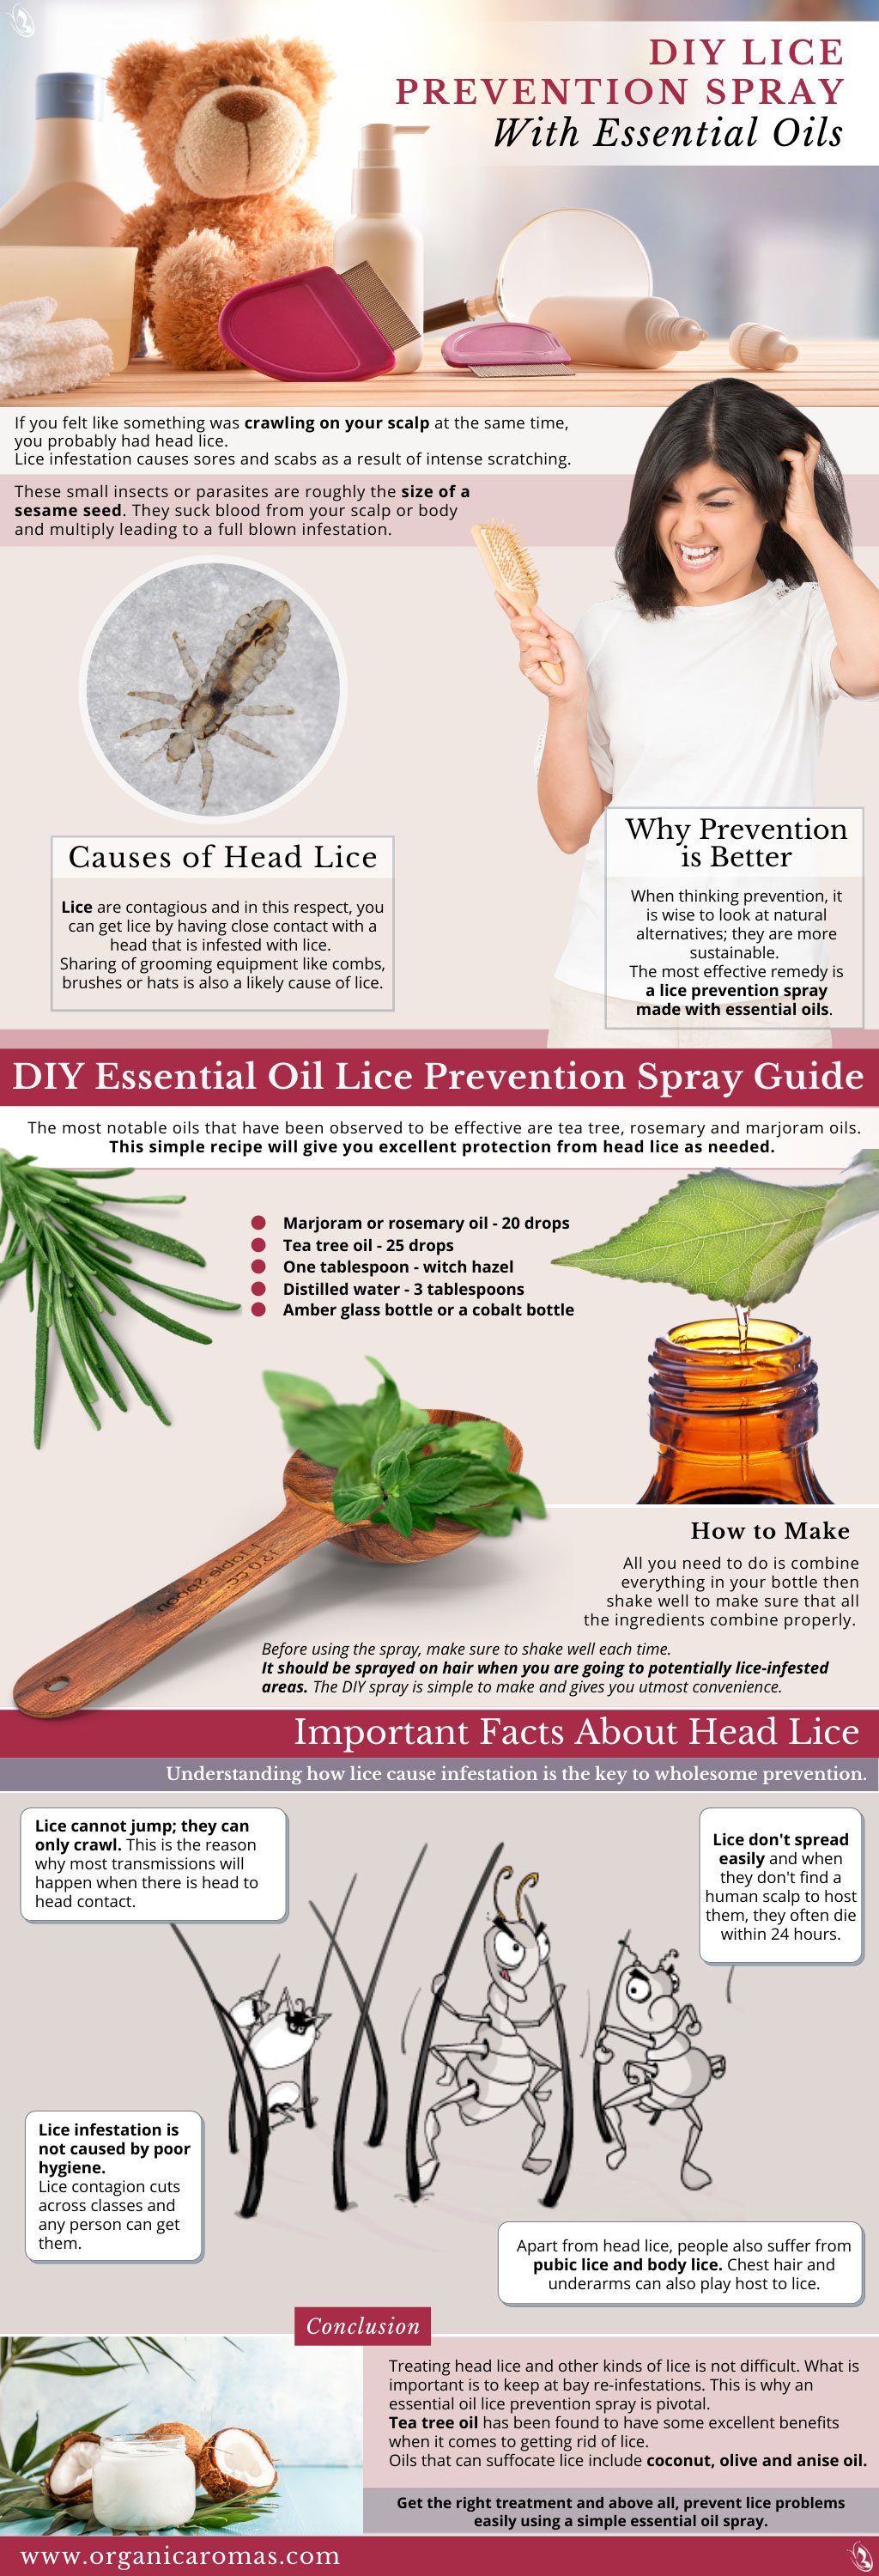 DIY Lice Prevention Spray With Essential Oils - Organic Aromas®